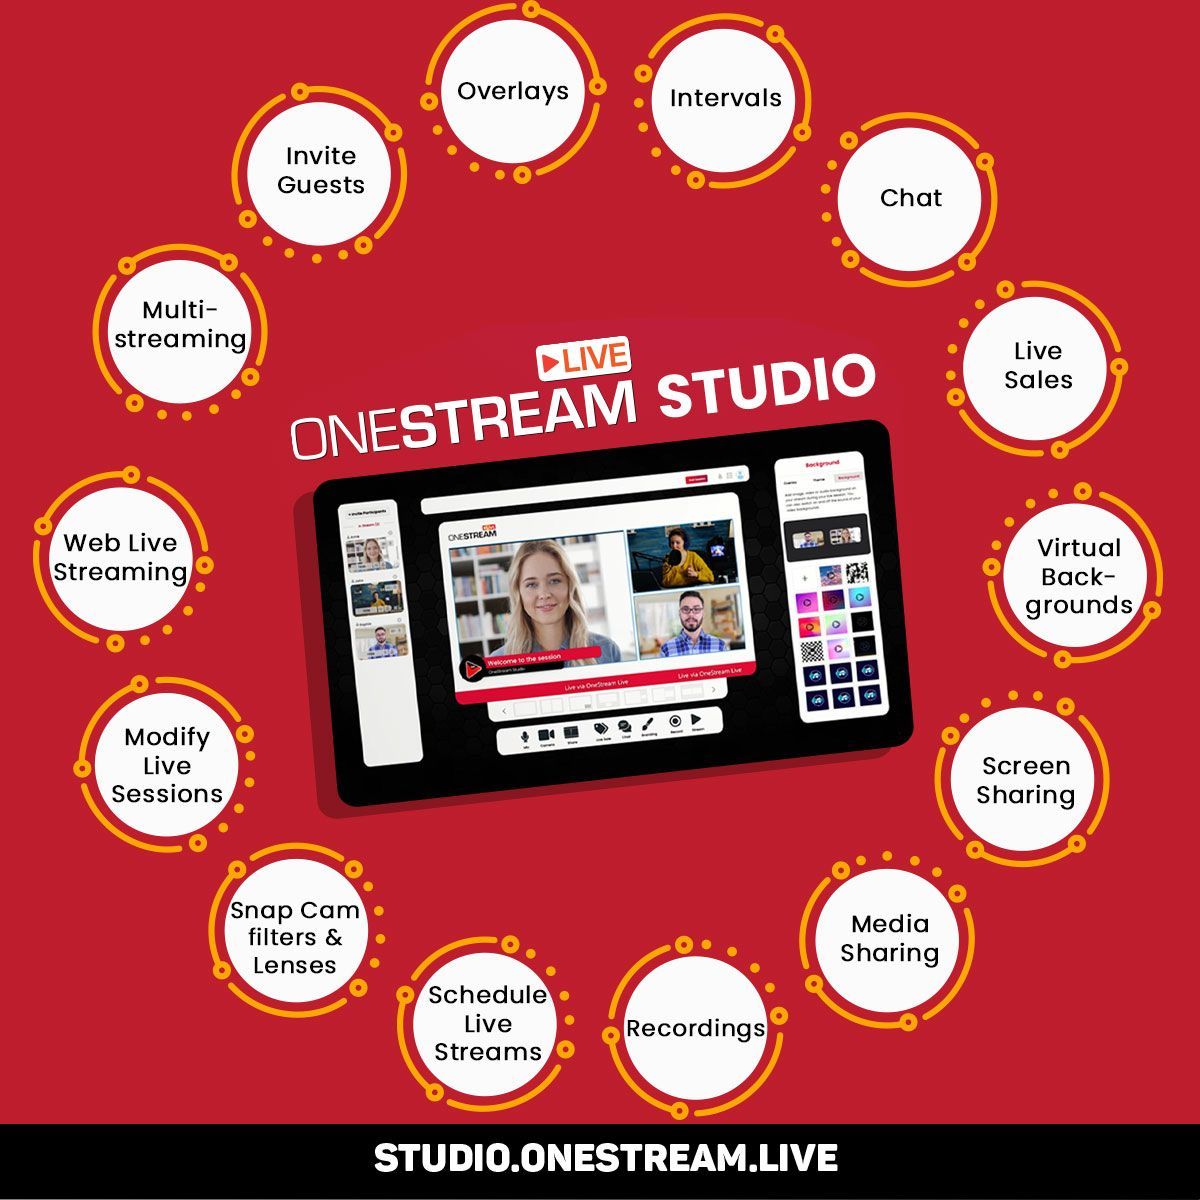 OneStream Studio features